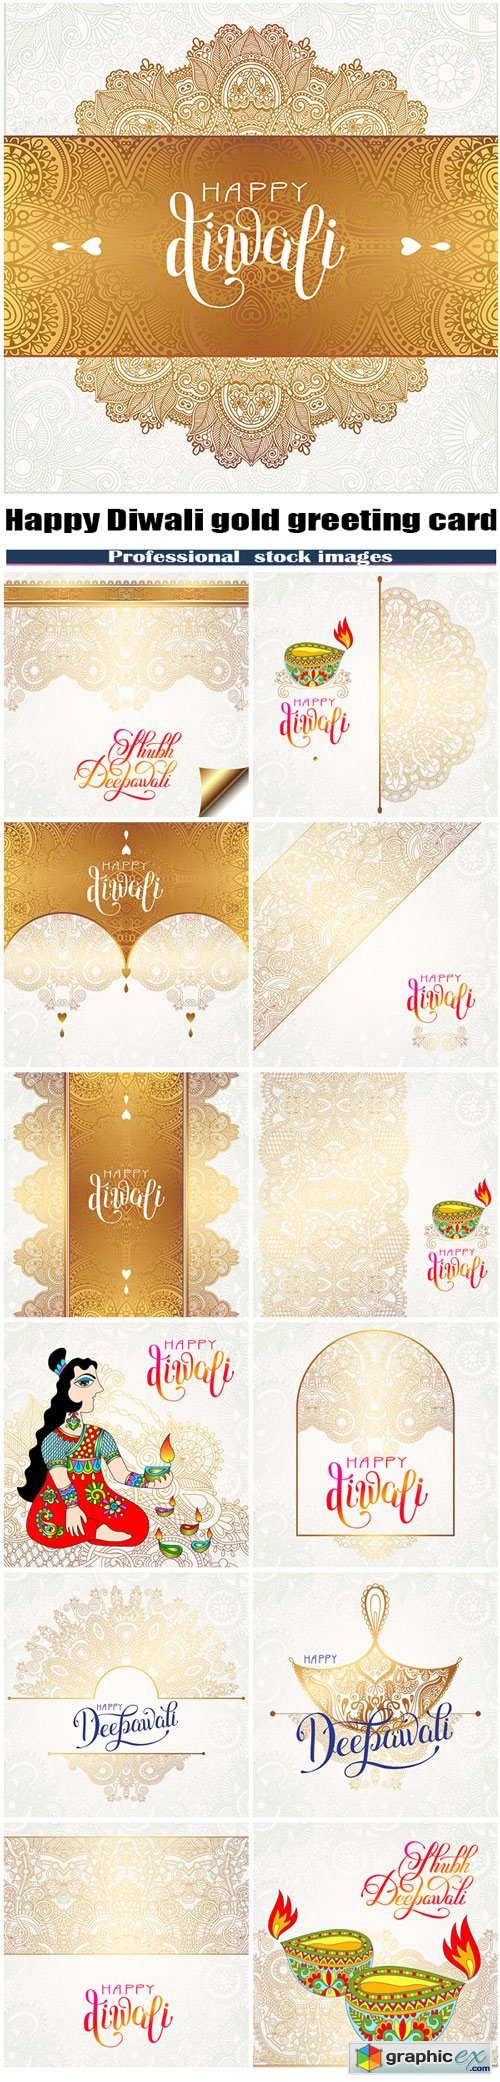 Happy Diwali gold greeting card